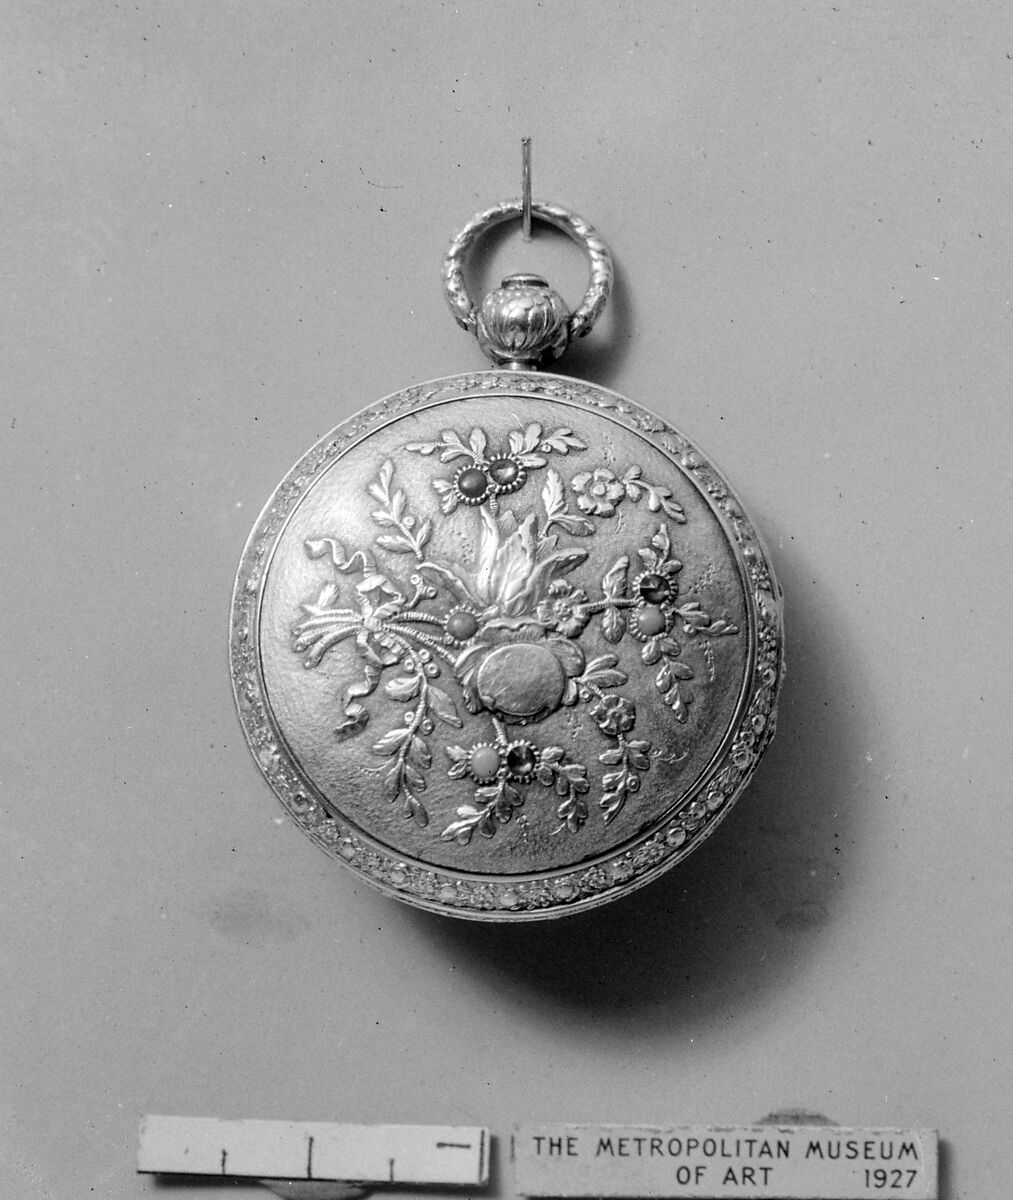 Watch, Watchmaker: Firm of Alliez, Bachelard et Terond Fils (ca. 1829), Gold, silver, jewels (turquoises and garnets?), steel, Swiss, Geneva 